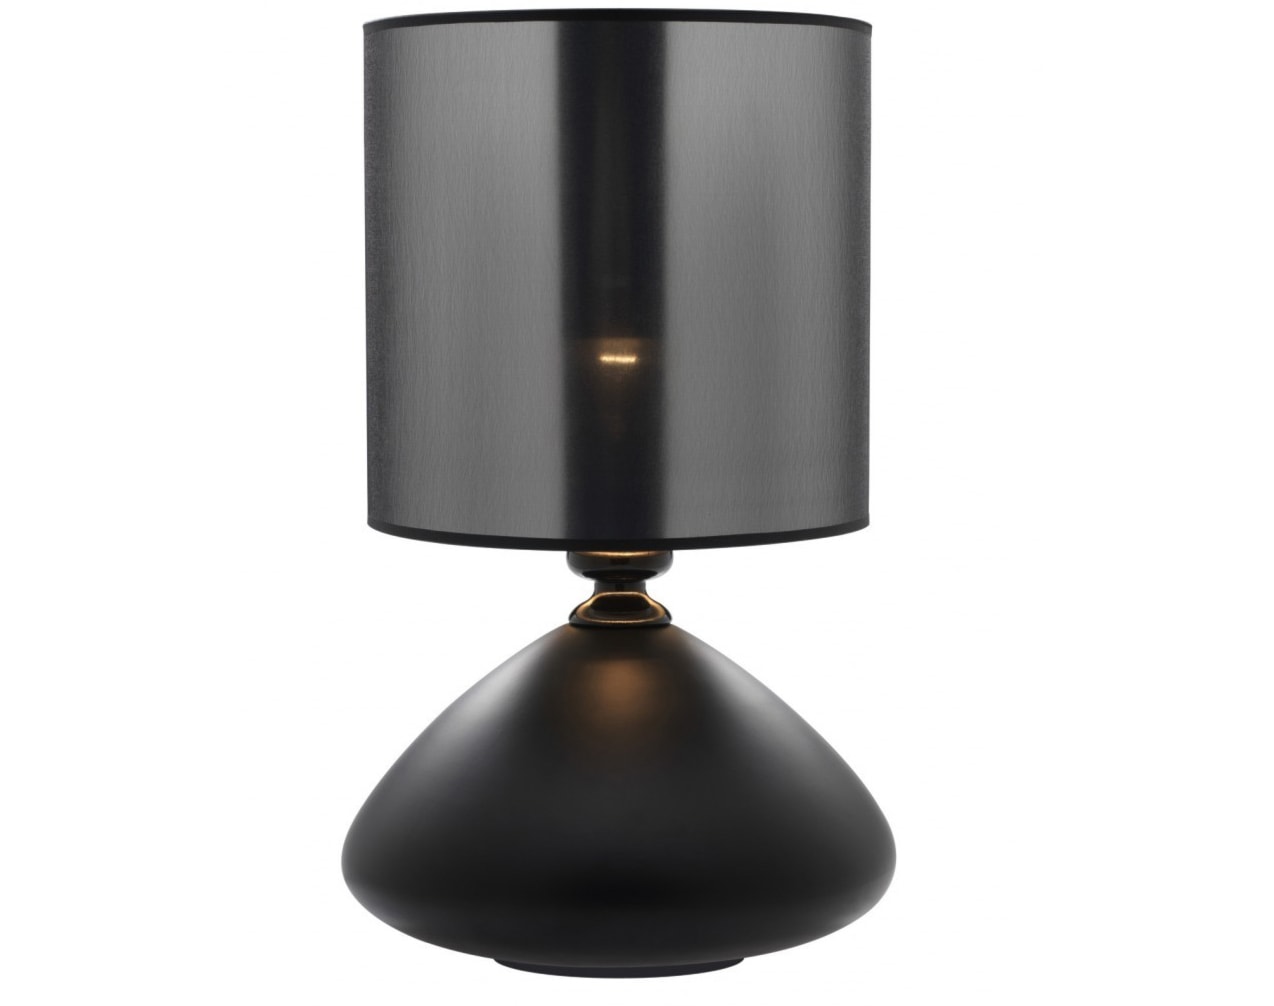 Lampa ceramiczna Black Mate Gloss - zdjęcie od onemarket.pl - meble i dodatki - Homebook